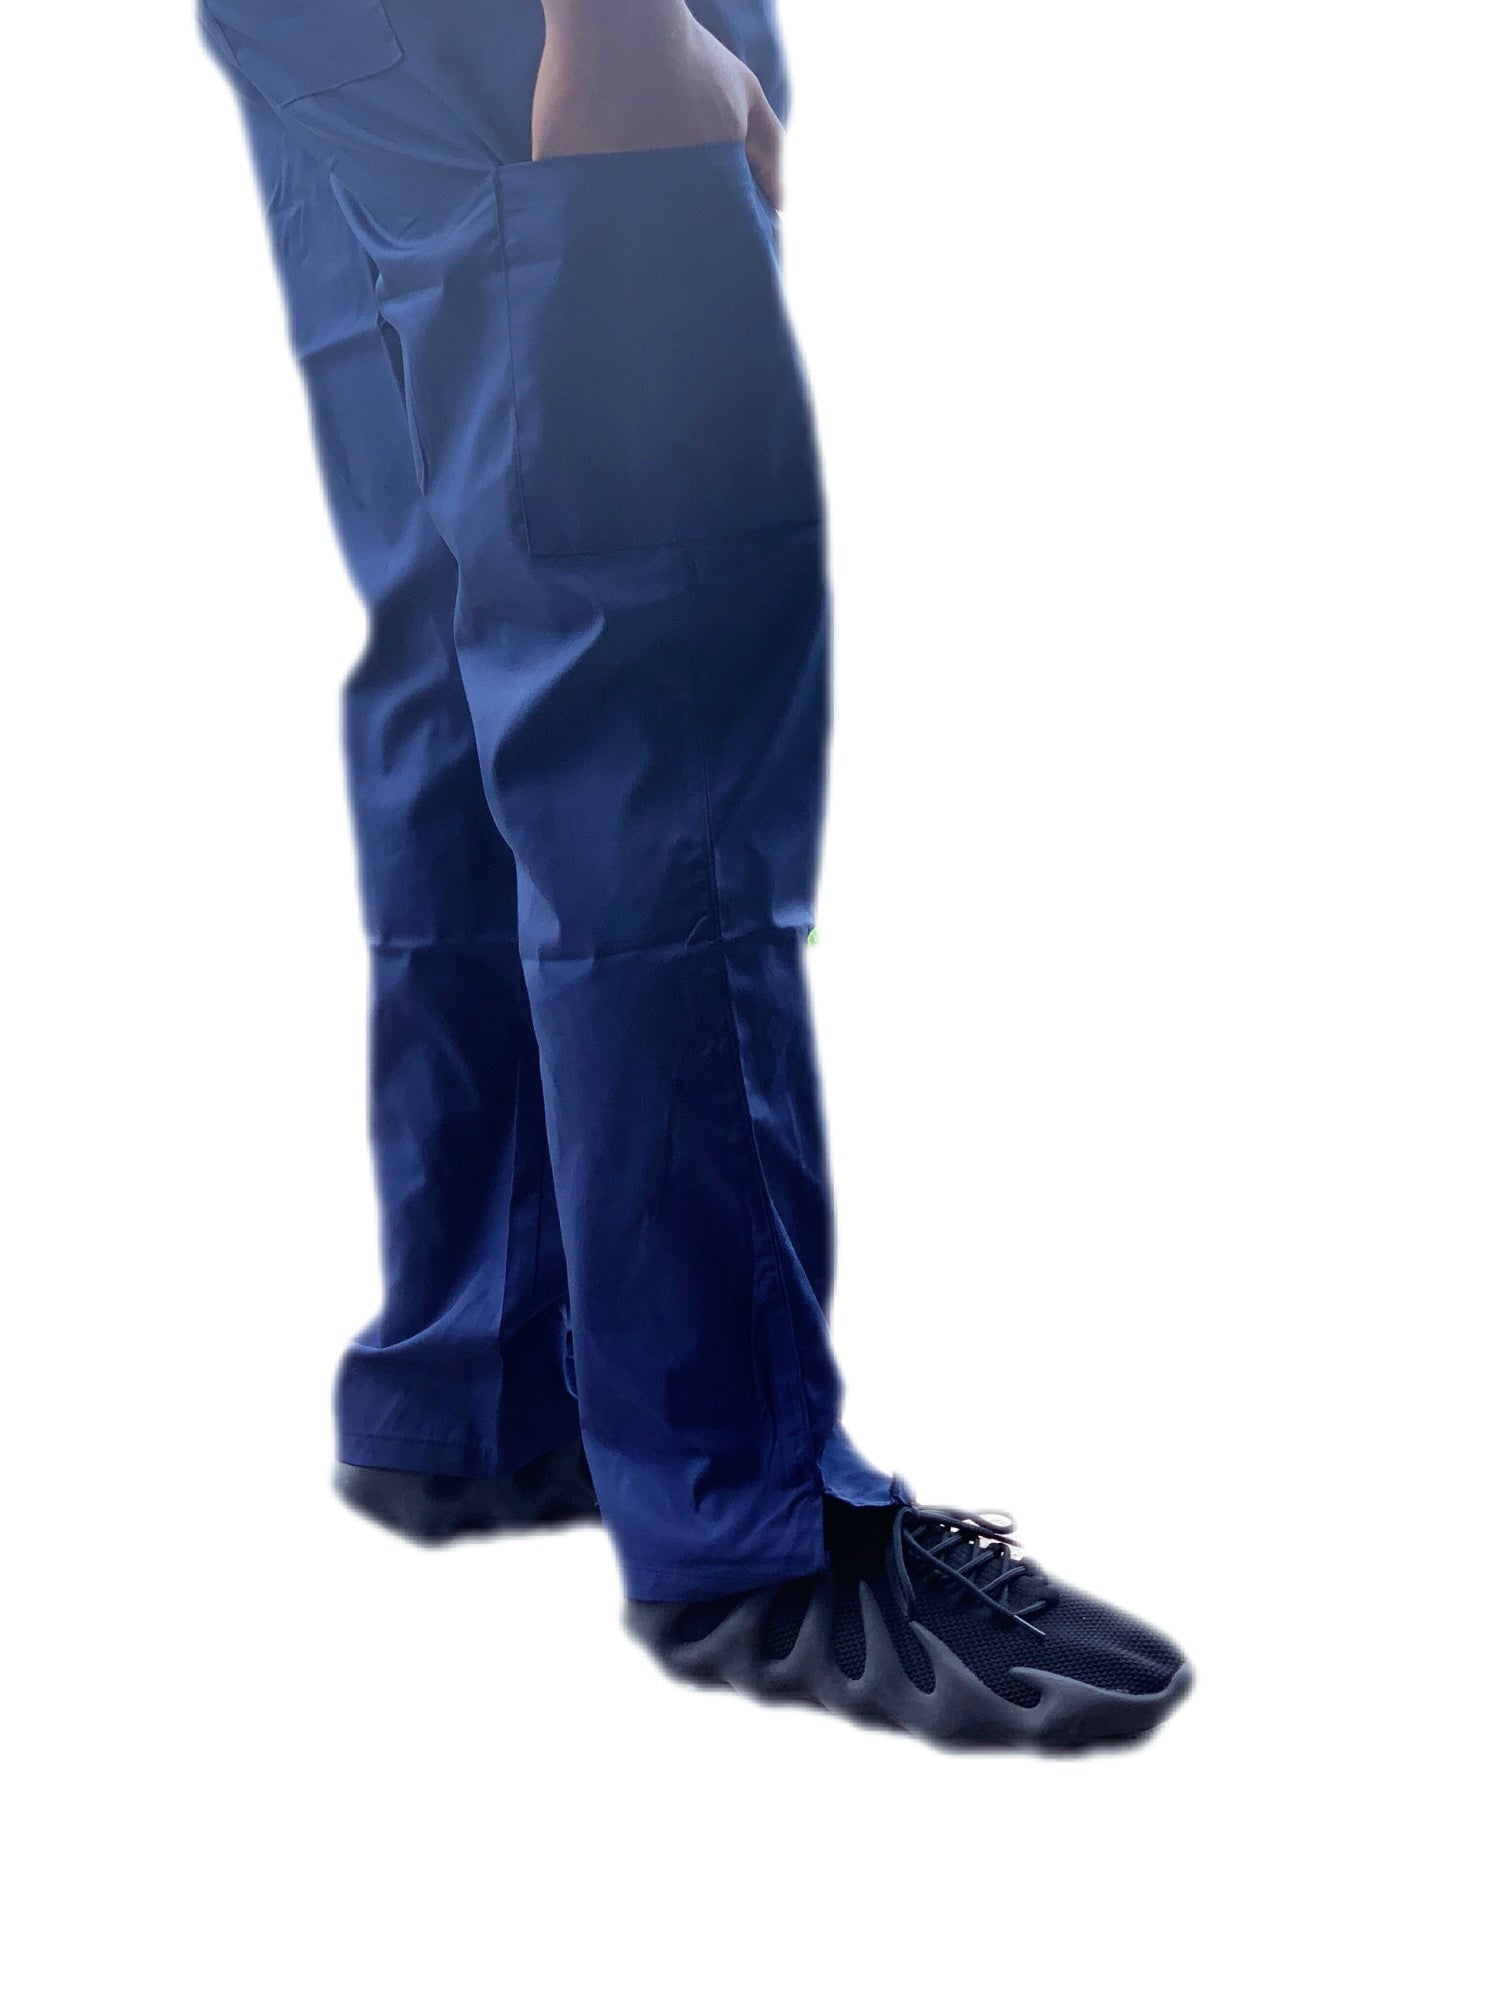 Man wearing classic scrub pants